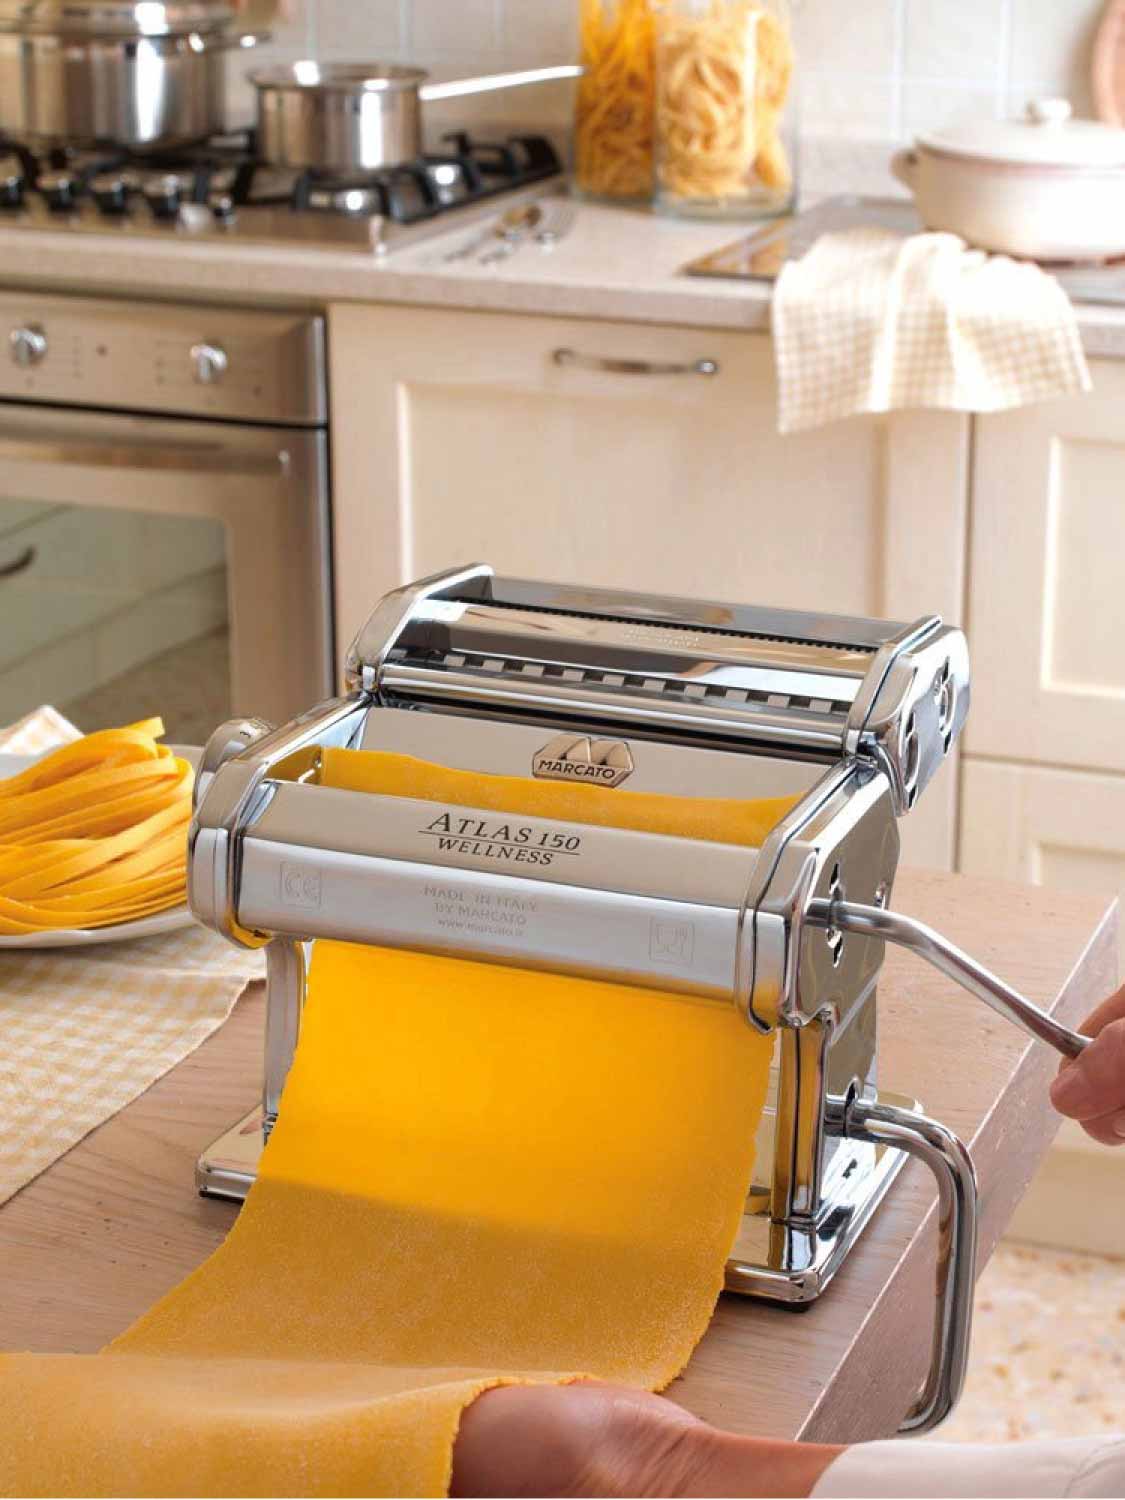  MARCATO 150 Pasta device : Home & Kitchen